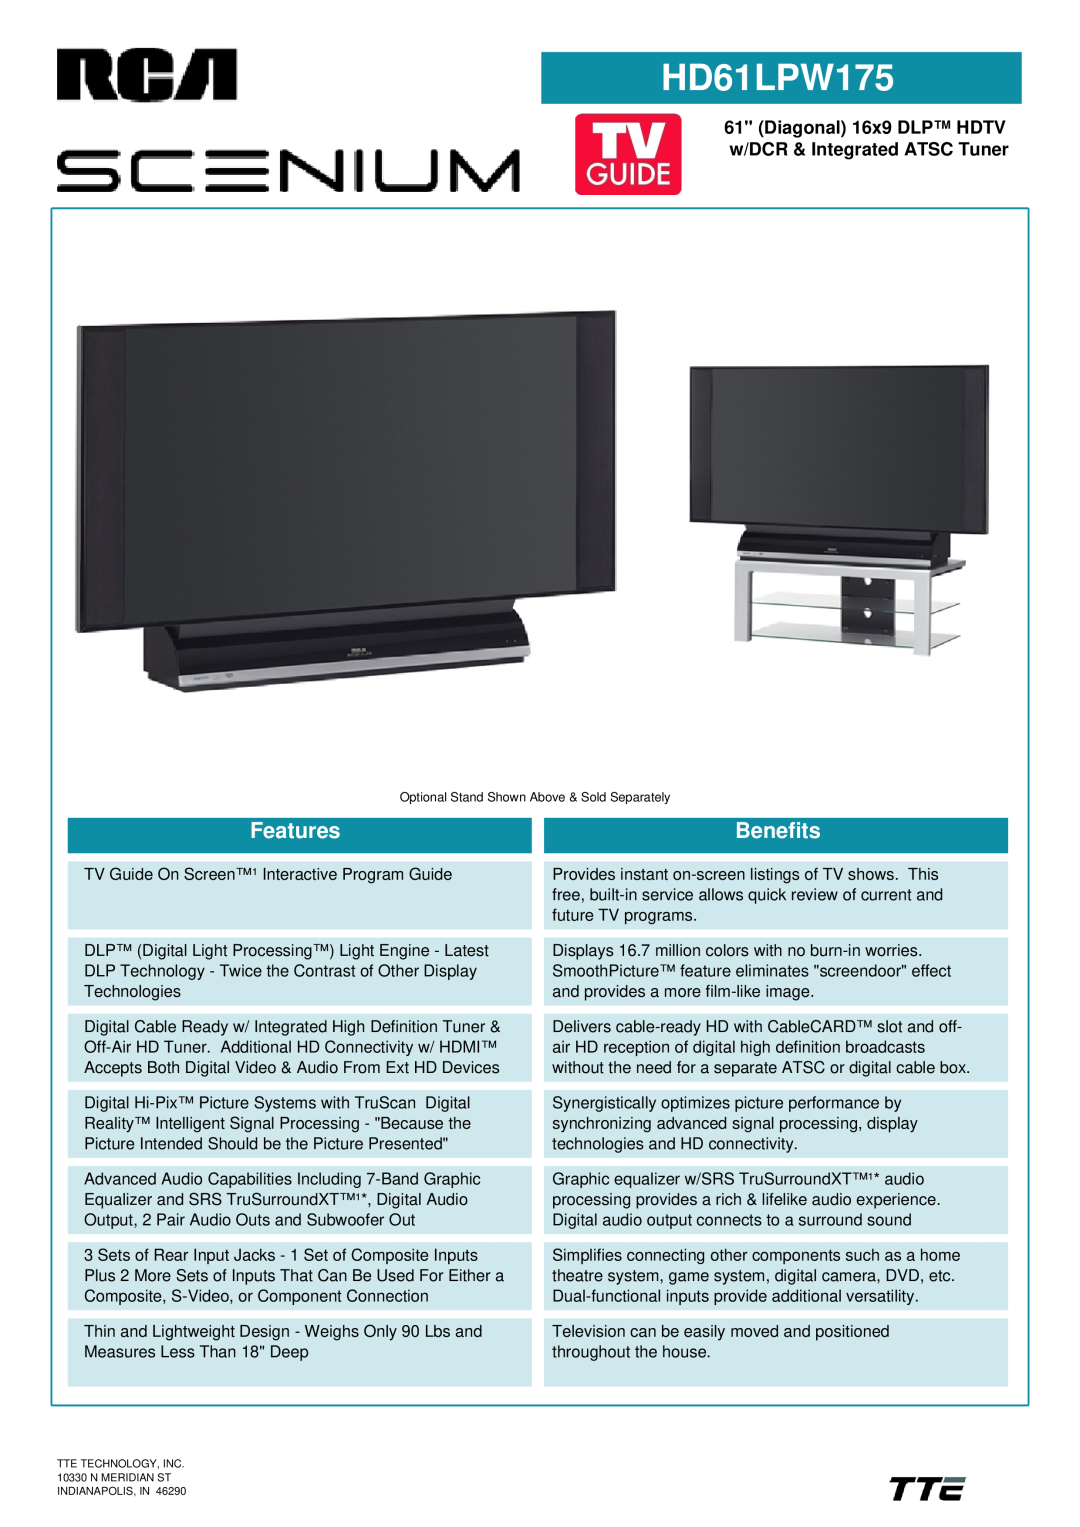 RCA HD61LPW175 manual Diagonal 16x9 DLP HDTV w/DCR & Integrated ATSC Tuner, Features, Benefits 